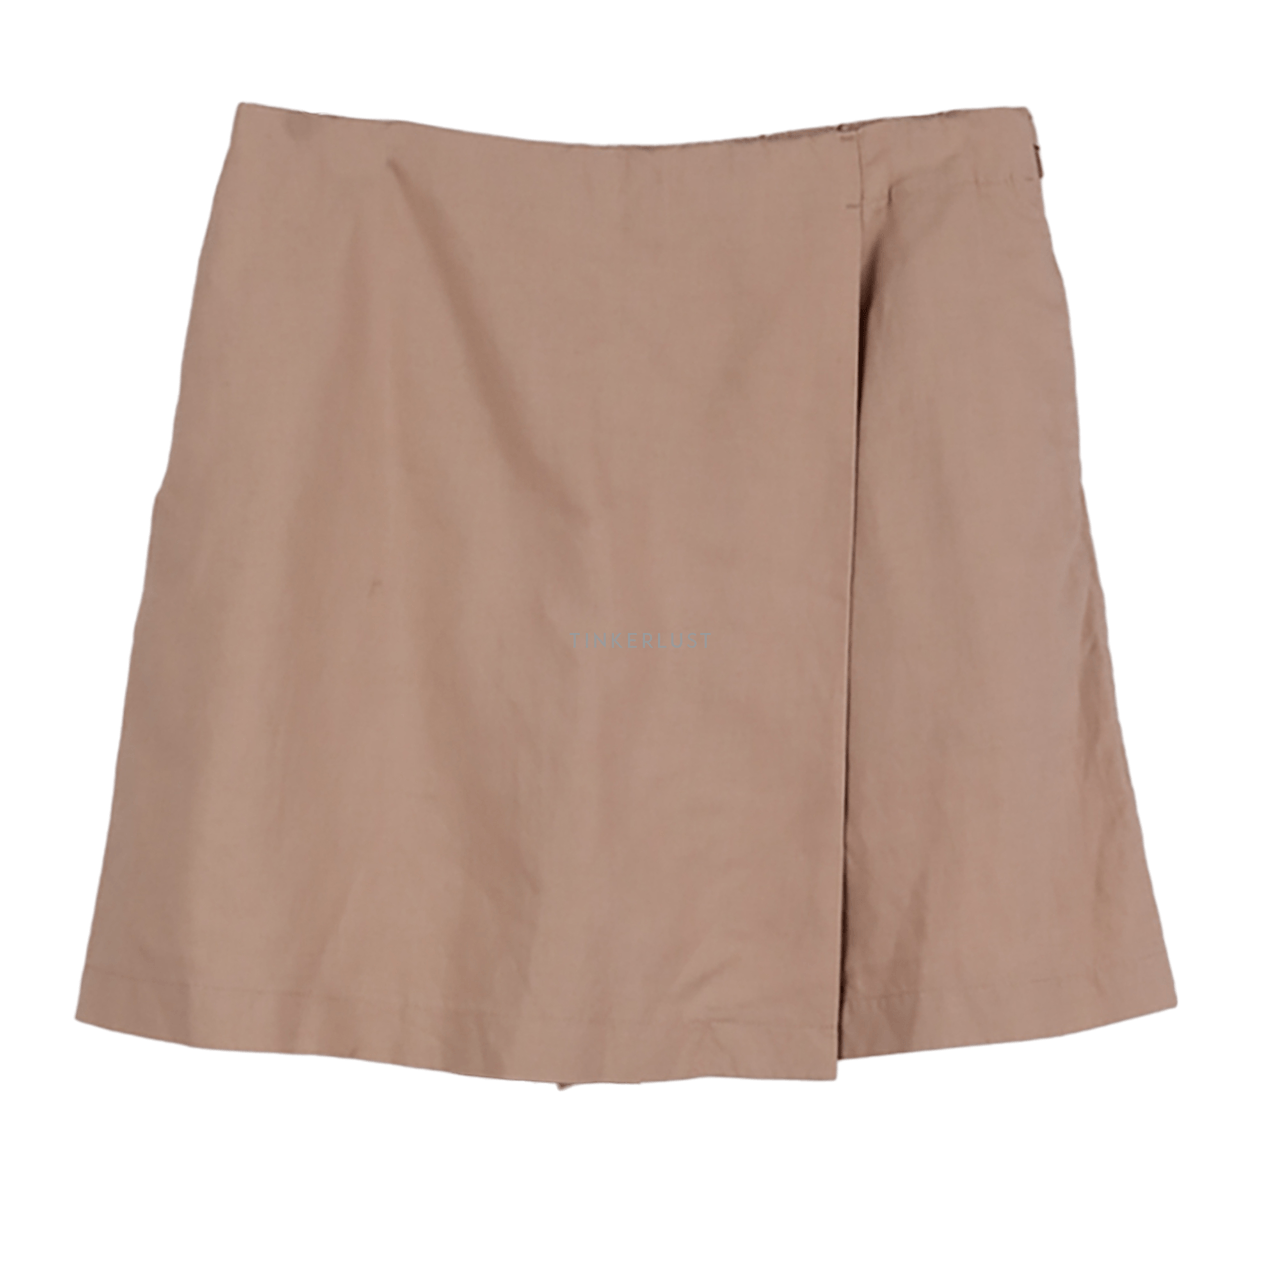 UNIQLO Tan Skirt